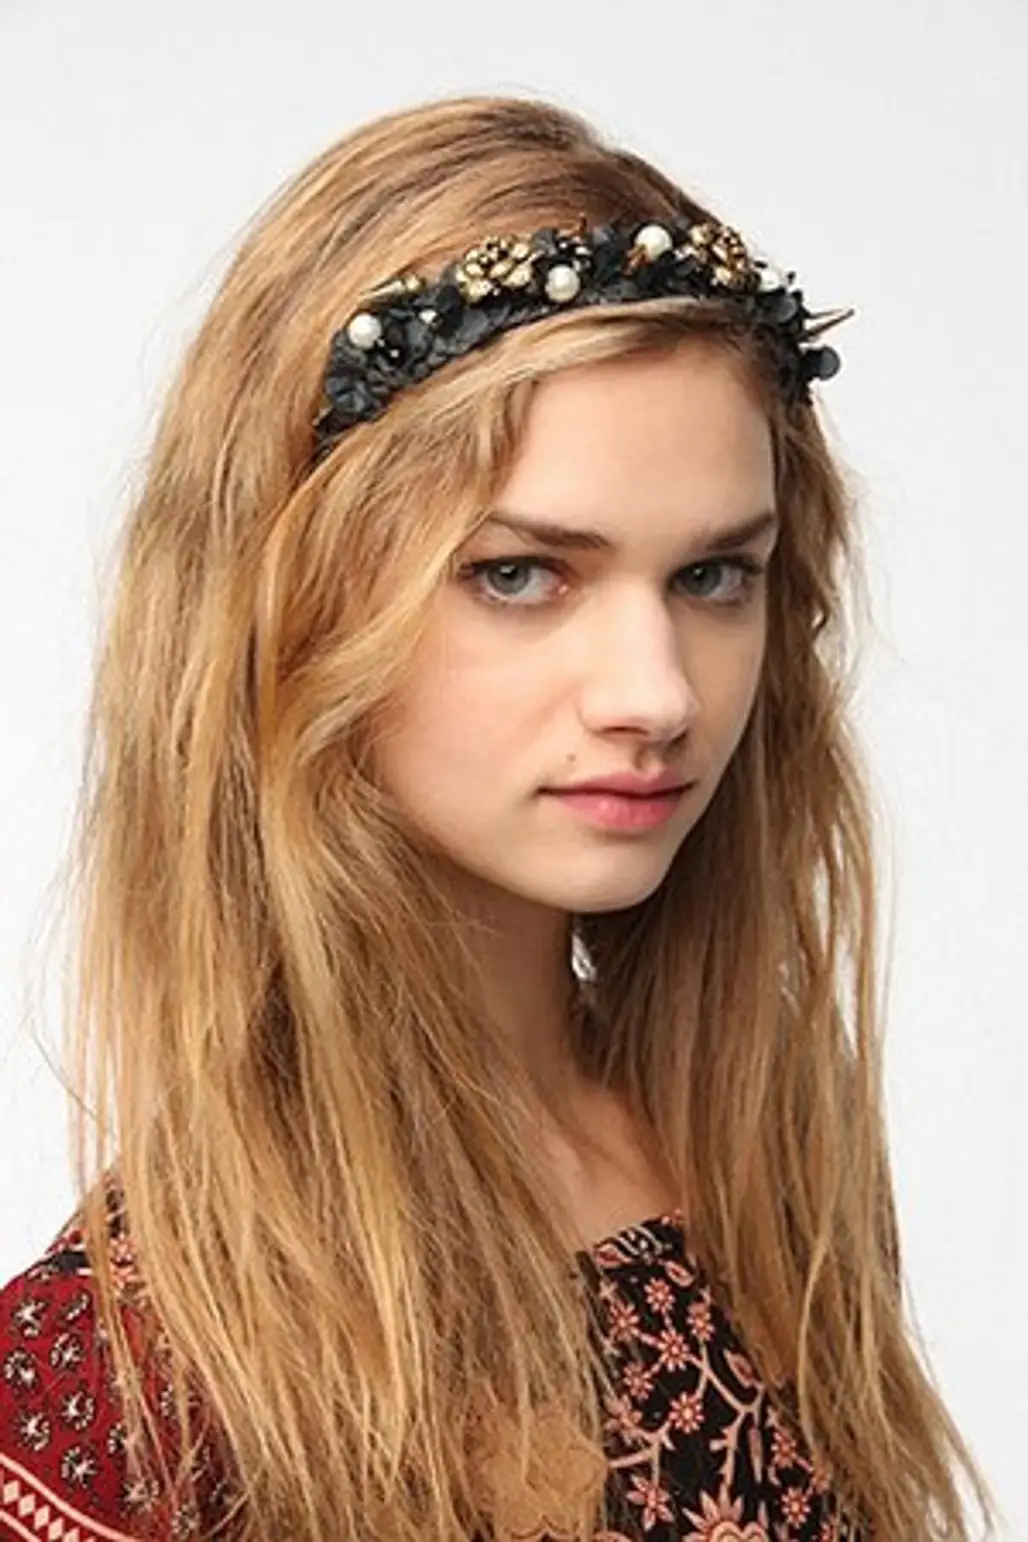 Antoinette Embellished Headband